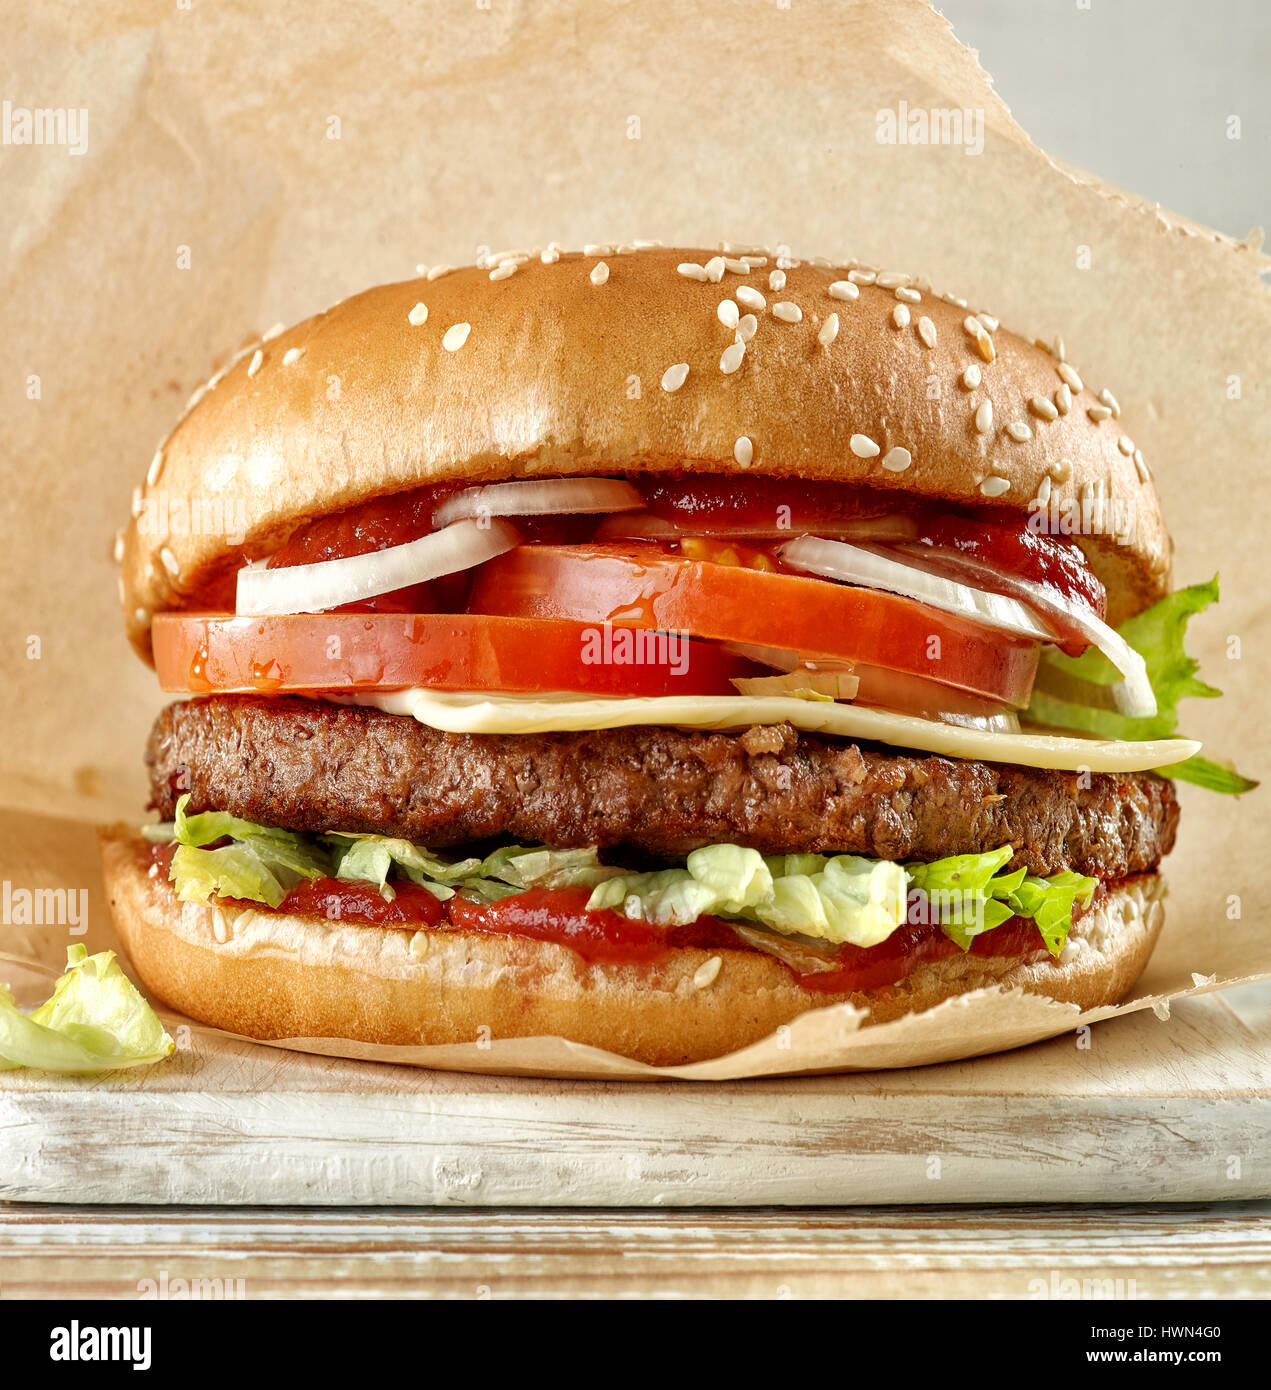 fresh tasty burger on wooden cutting board Stock Photo